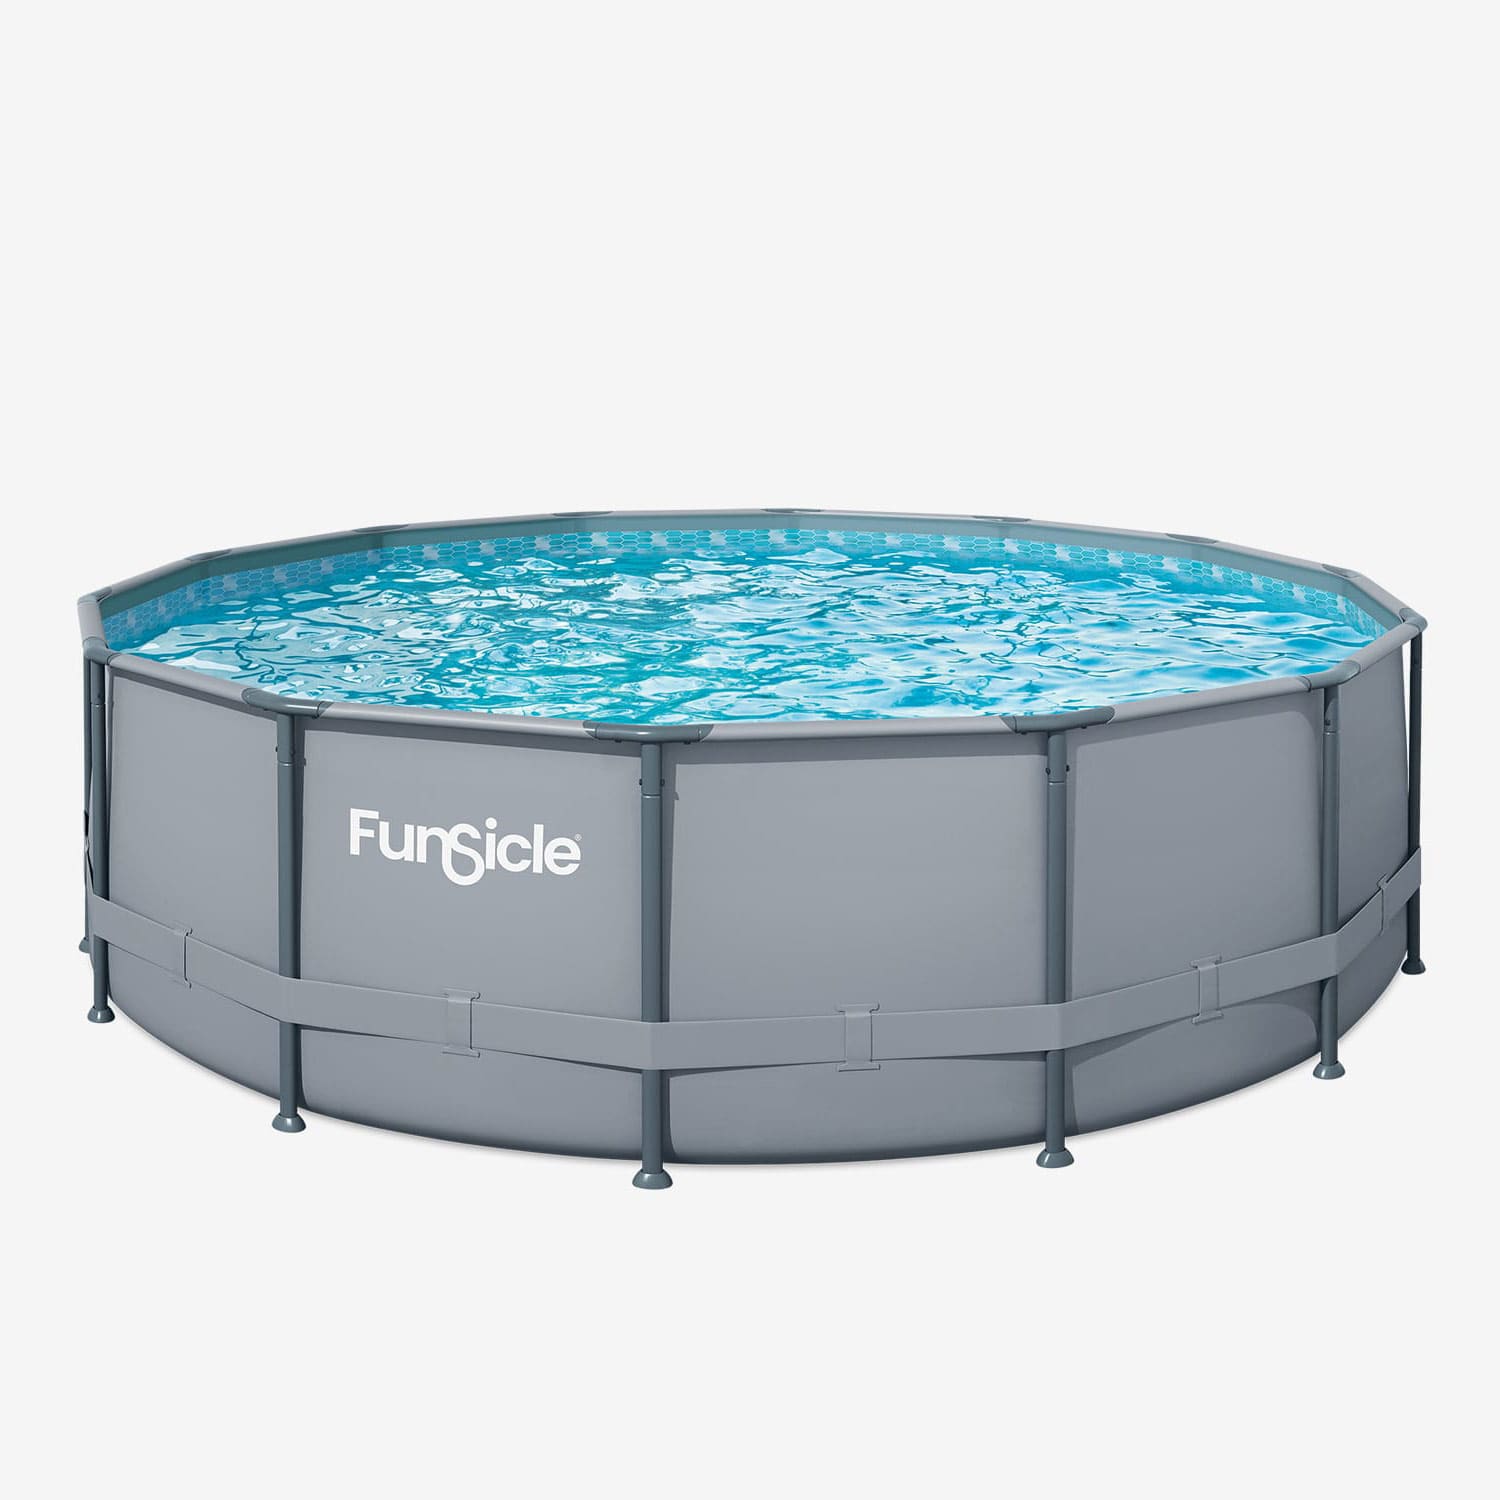 Funsicle 16 ft Oasis Pool